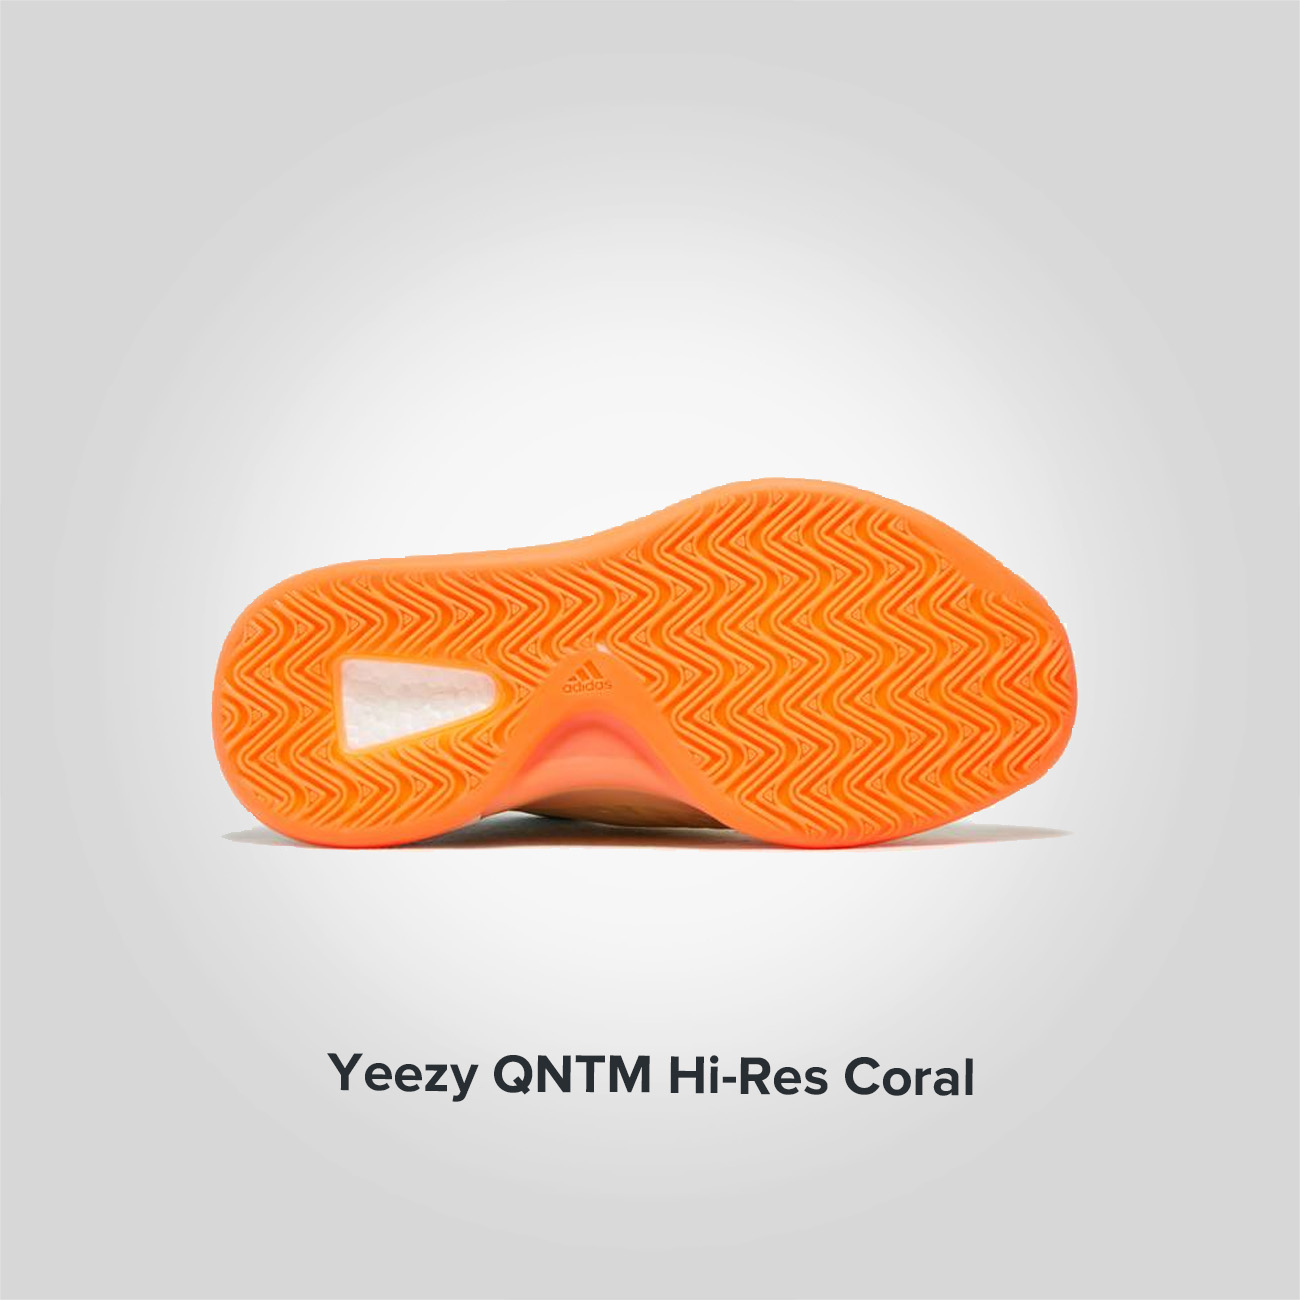 Yeezy QNTM Hi-Res Coral